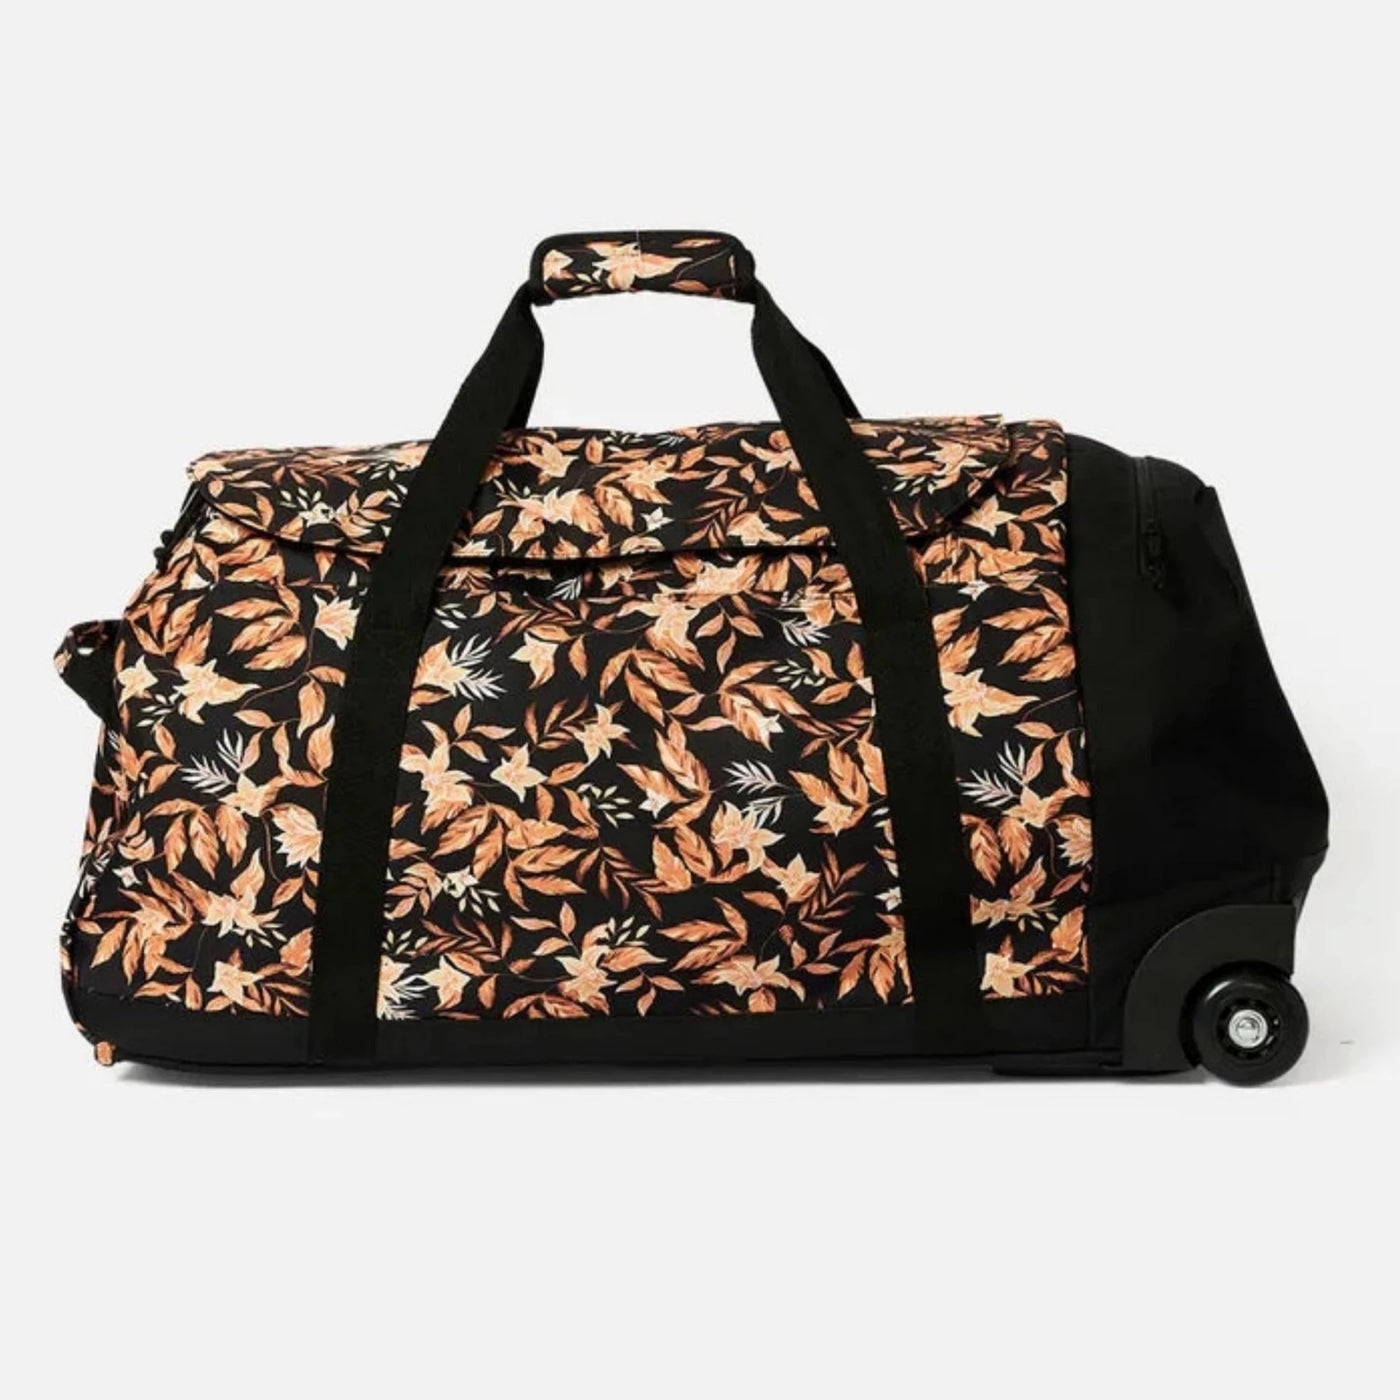 Rip Curl 80L Jupiter Mixed Travel Bag - Black